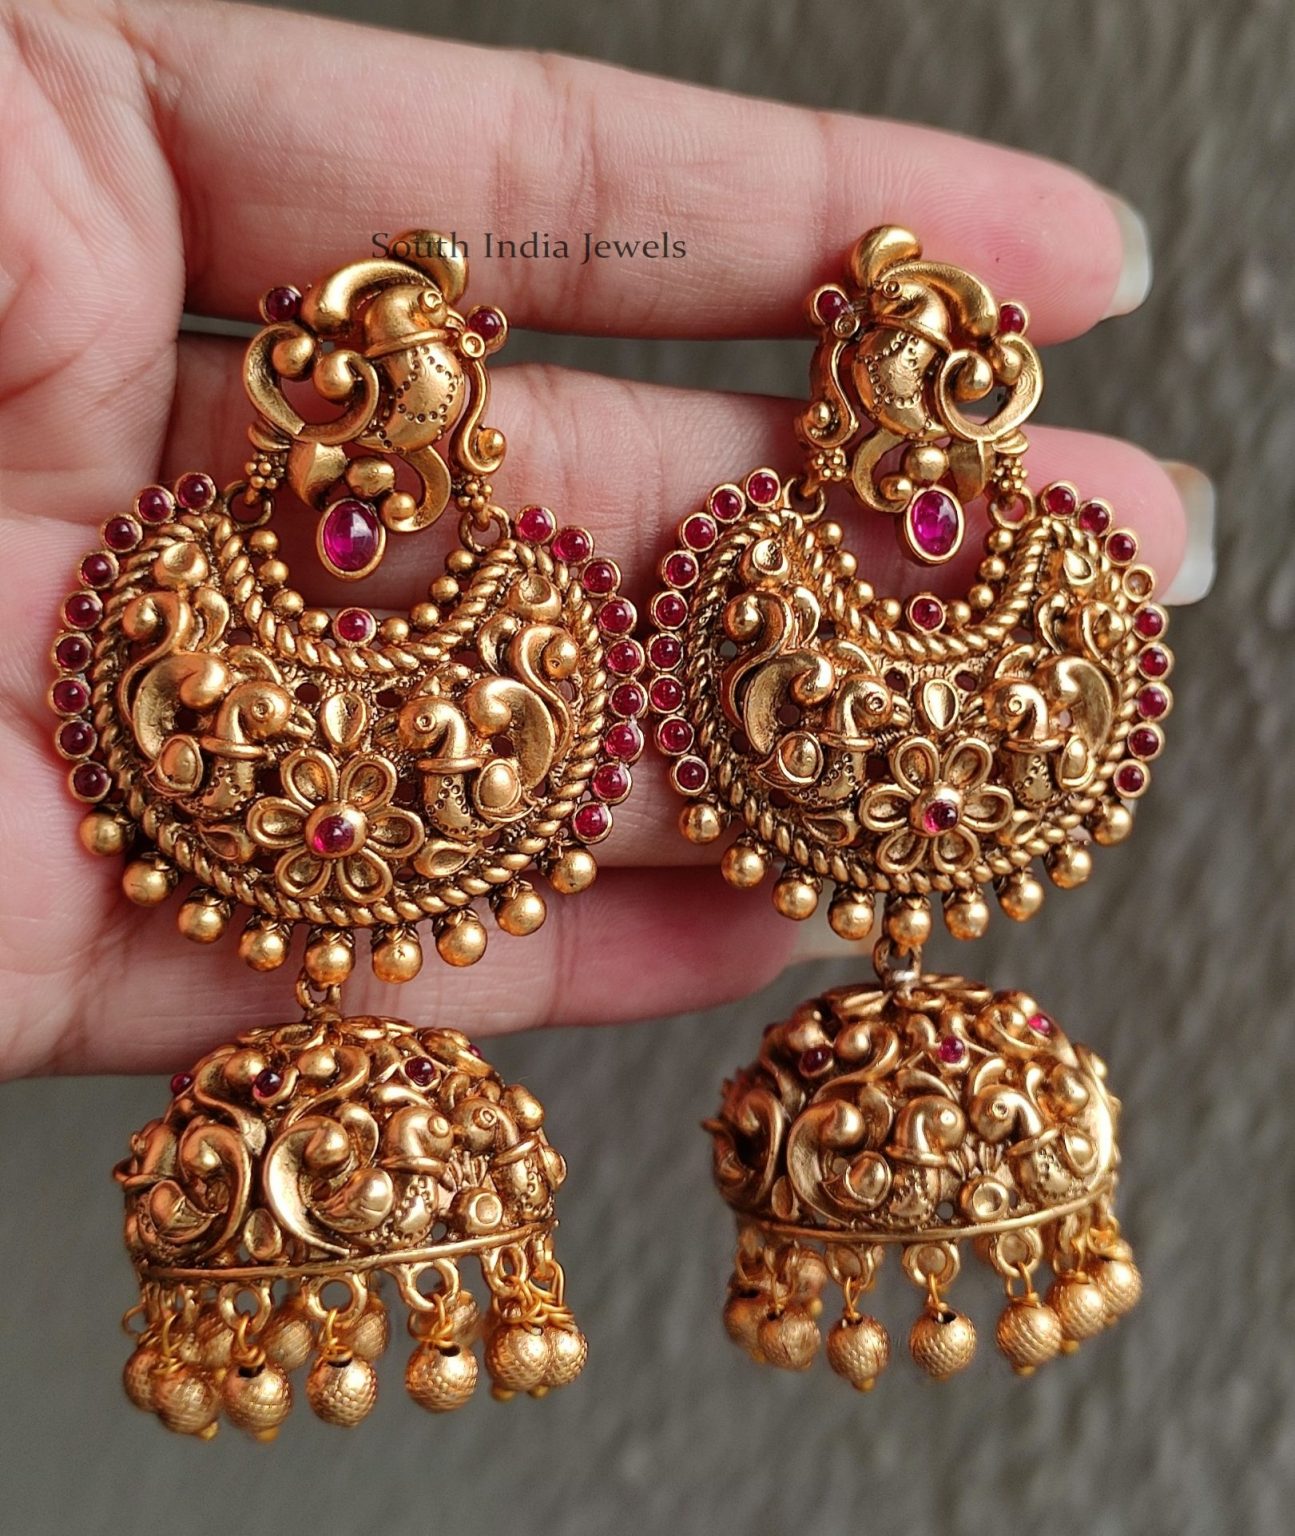 Beautiful Flower Design Jhumkas - South India Jewels